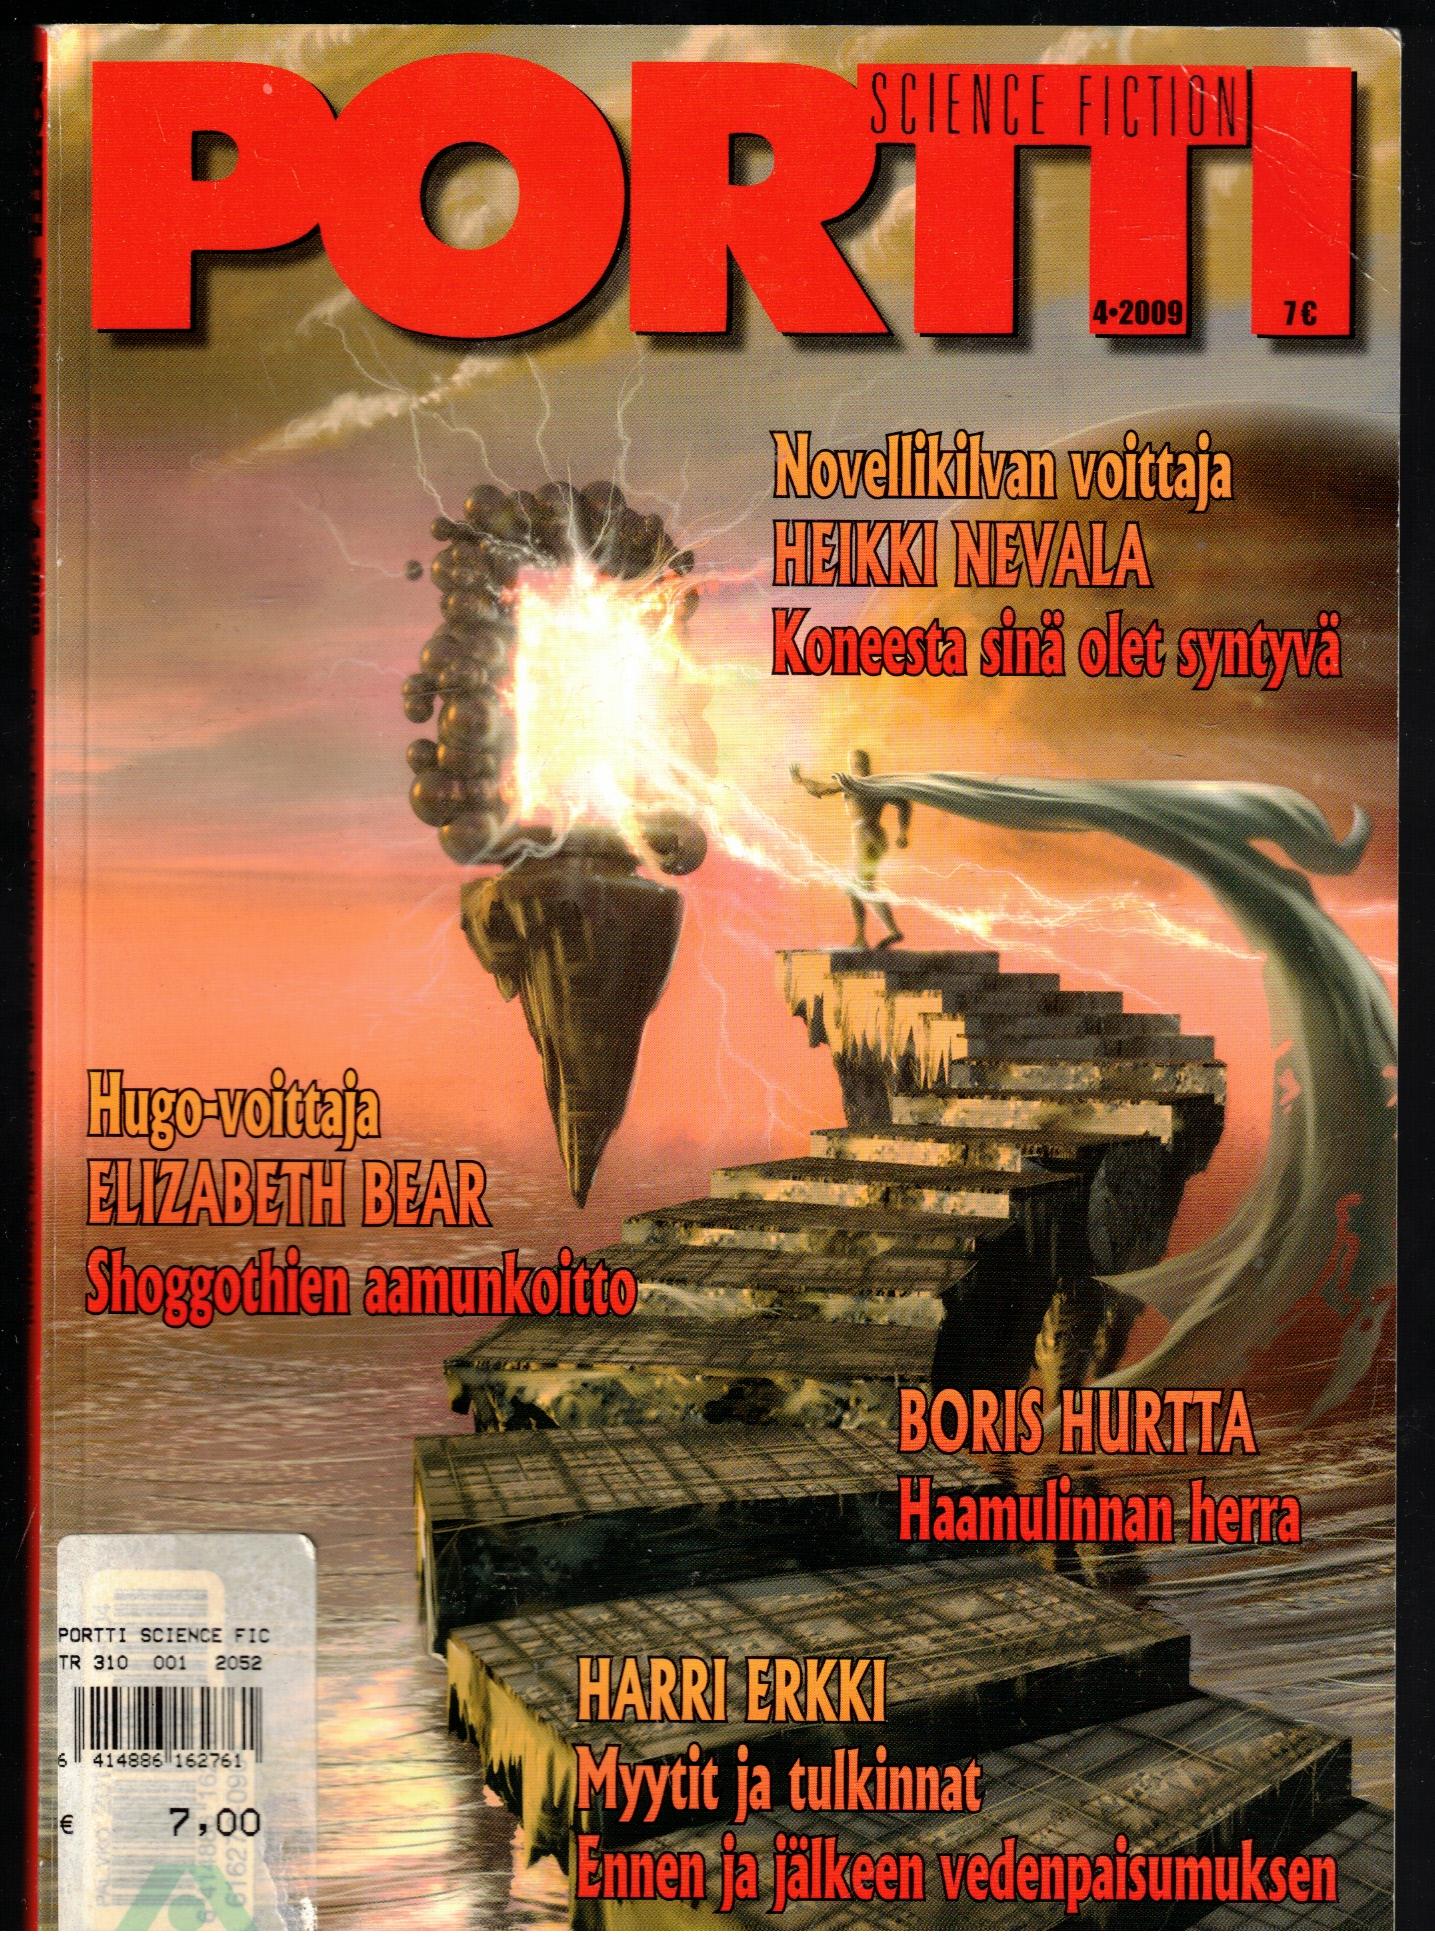 Portti science fiction 4/2009